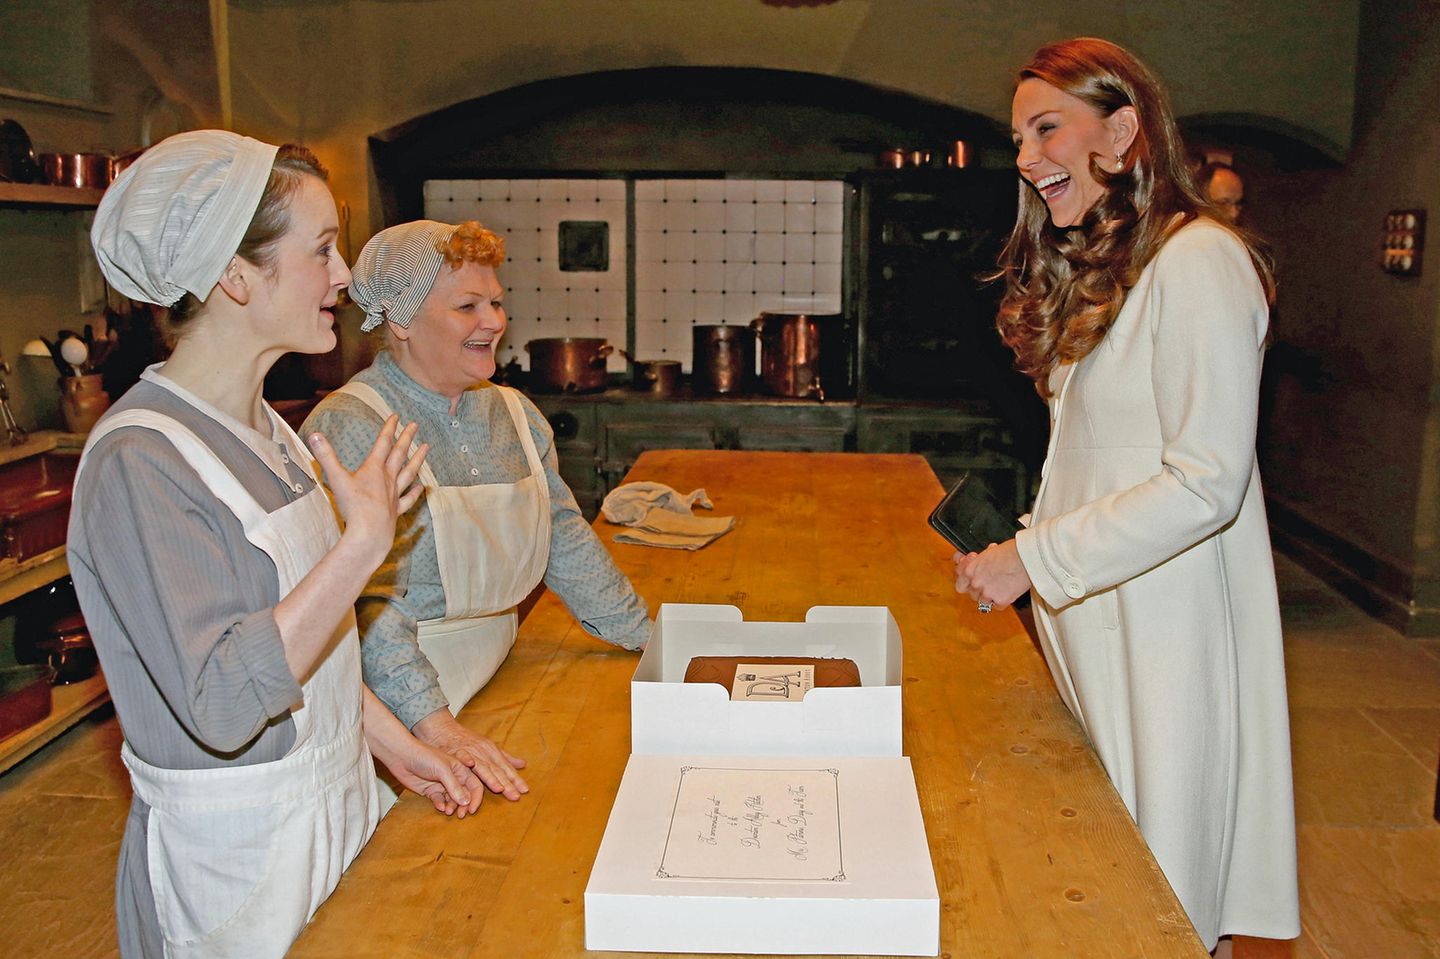 Sopie McShera, Lesley Nicol + Herzogin Catherine am Set von "Downton Abbey"